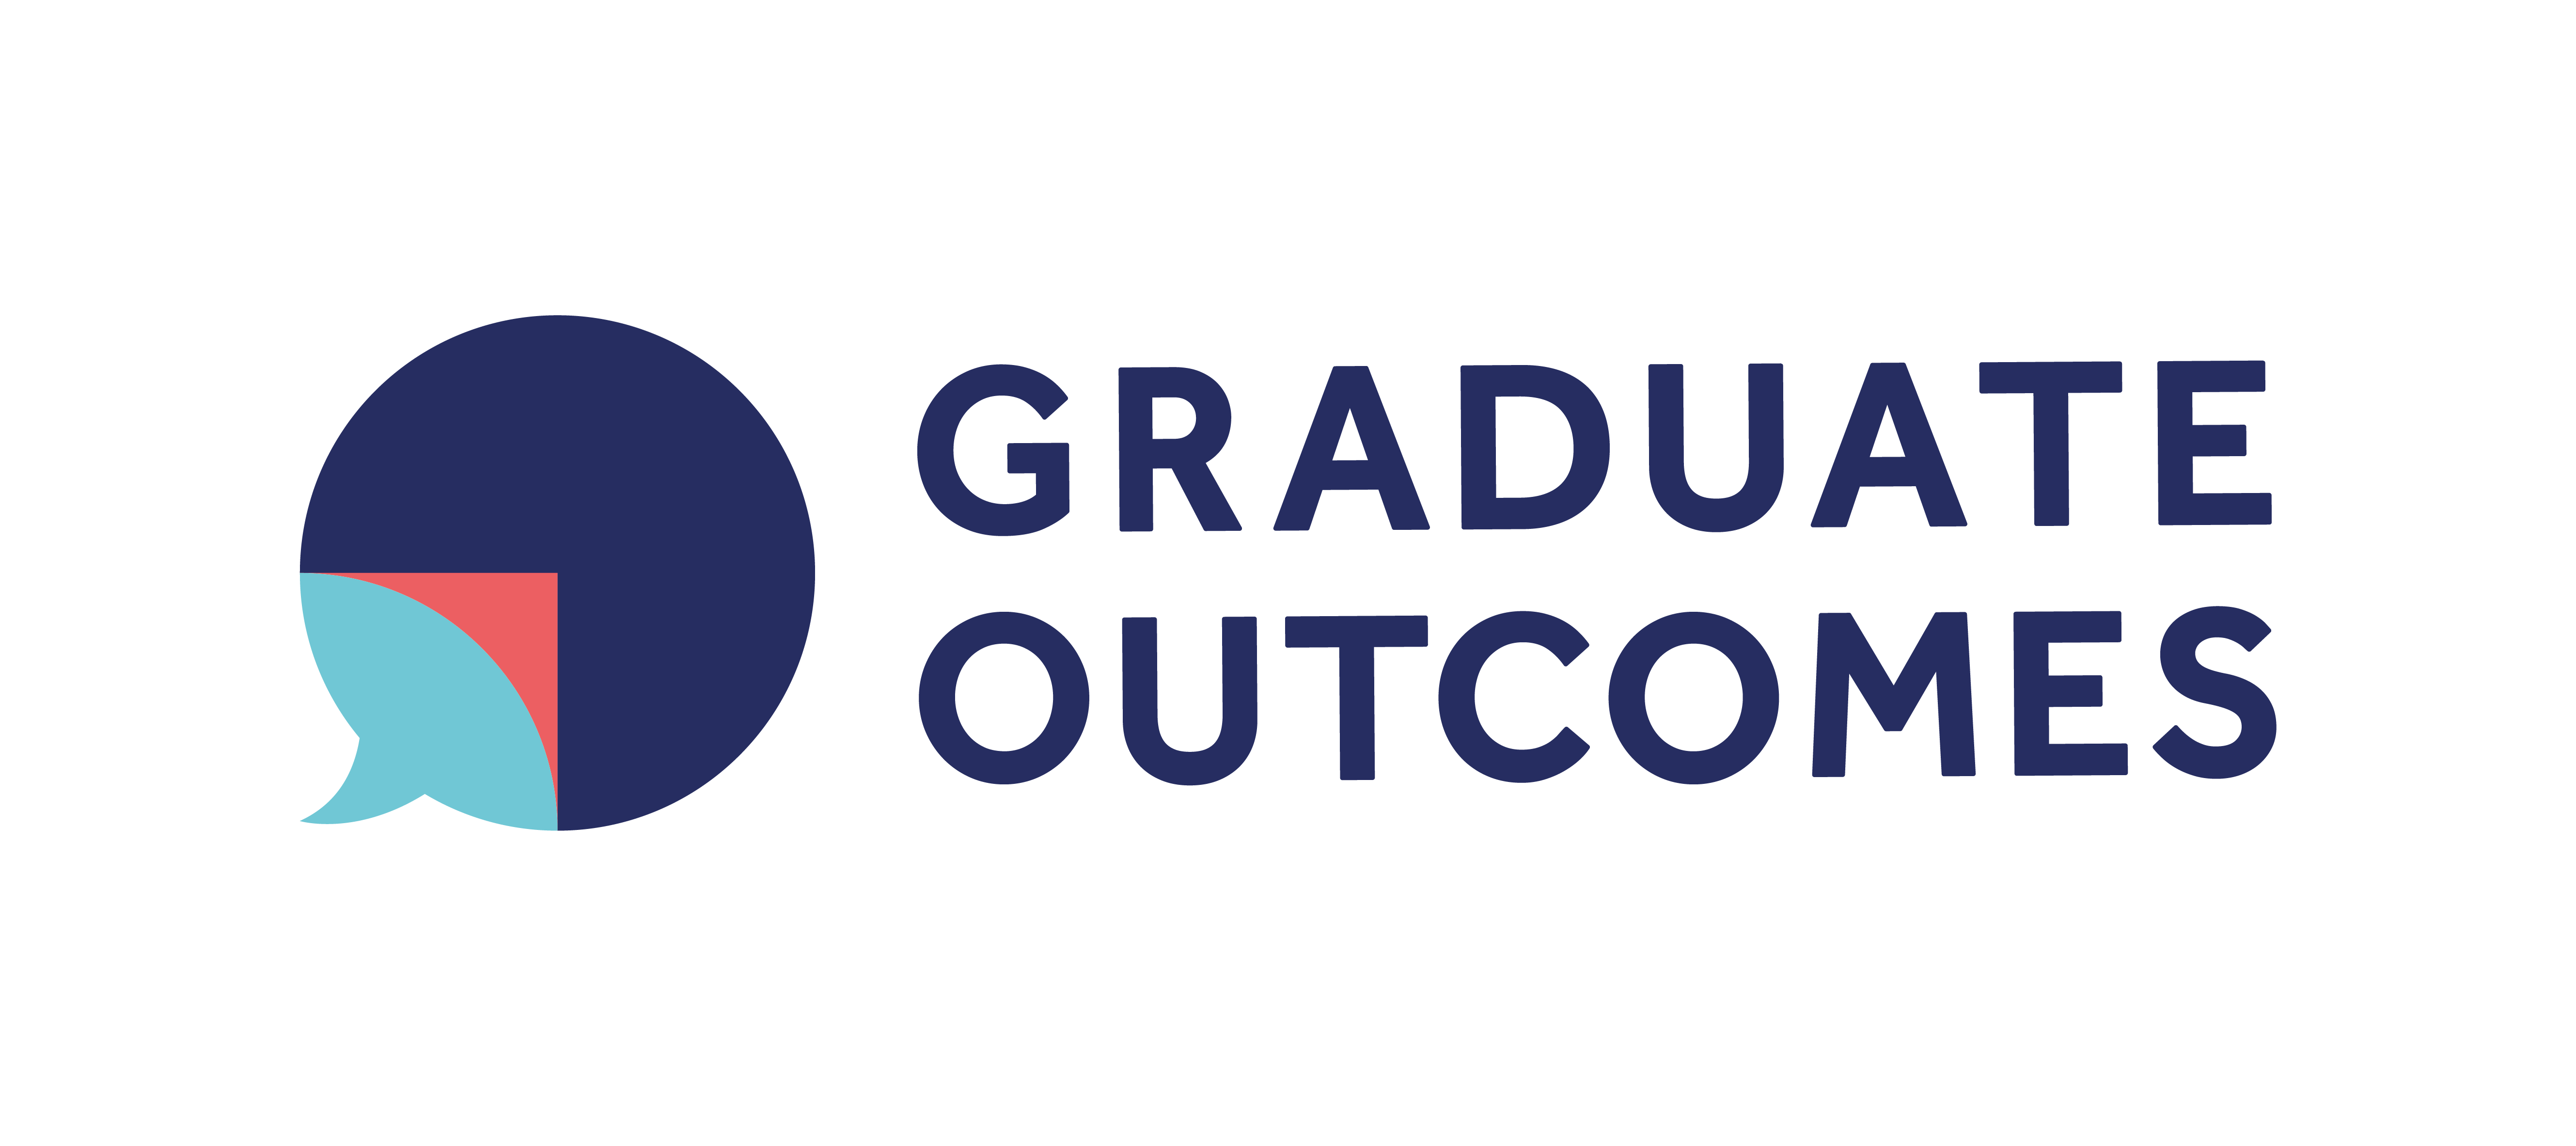 Graduate Outcomes survey